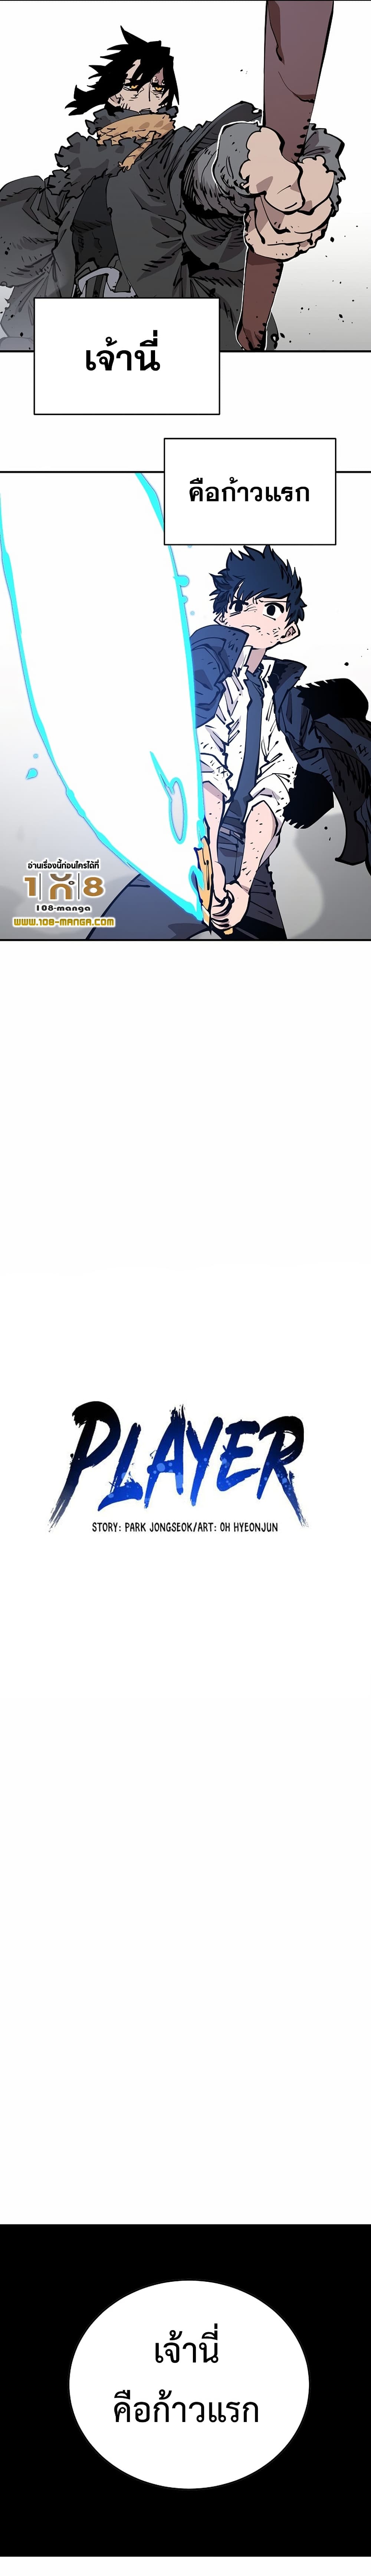 Player 84 (10)